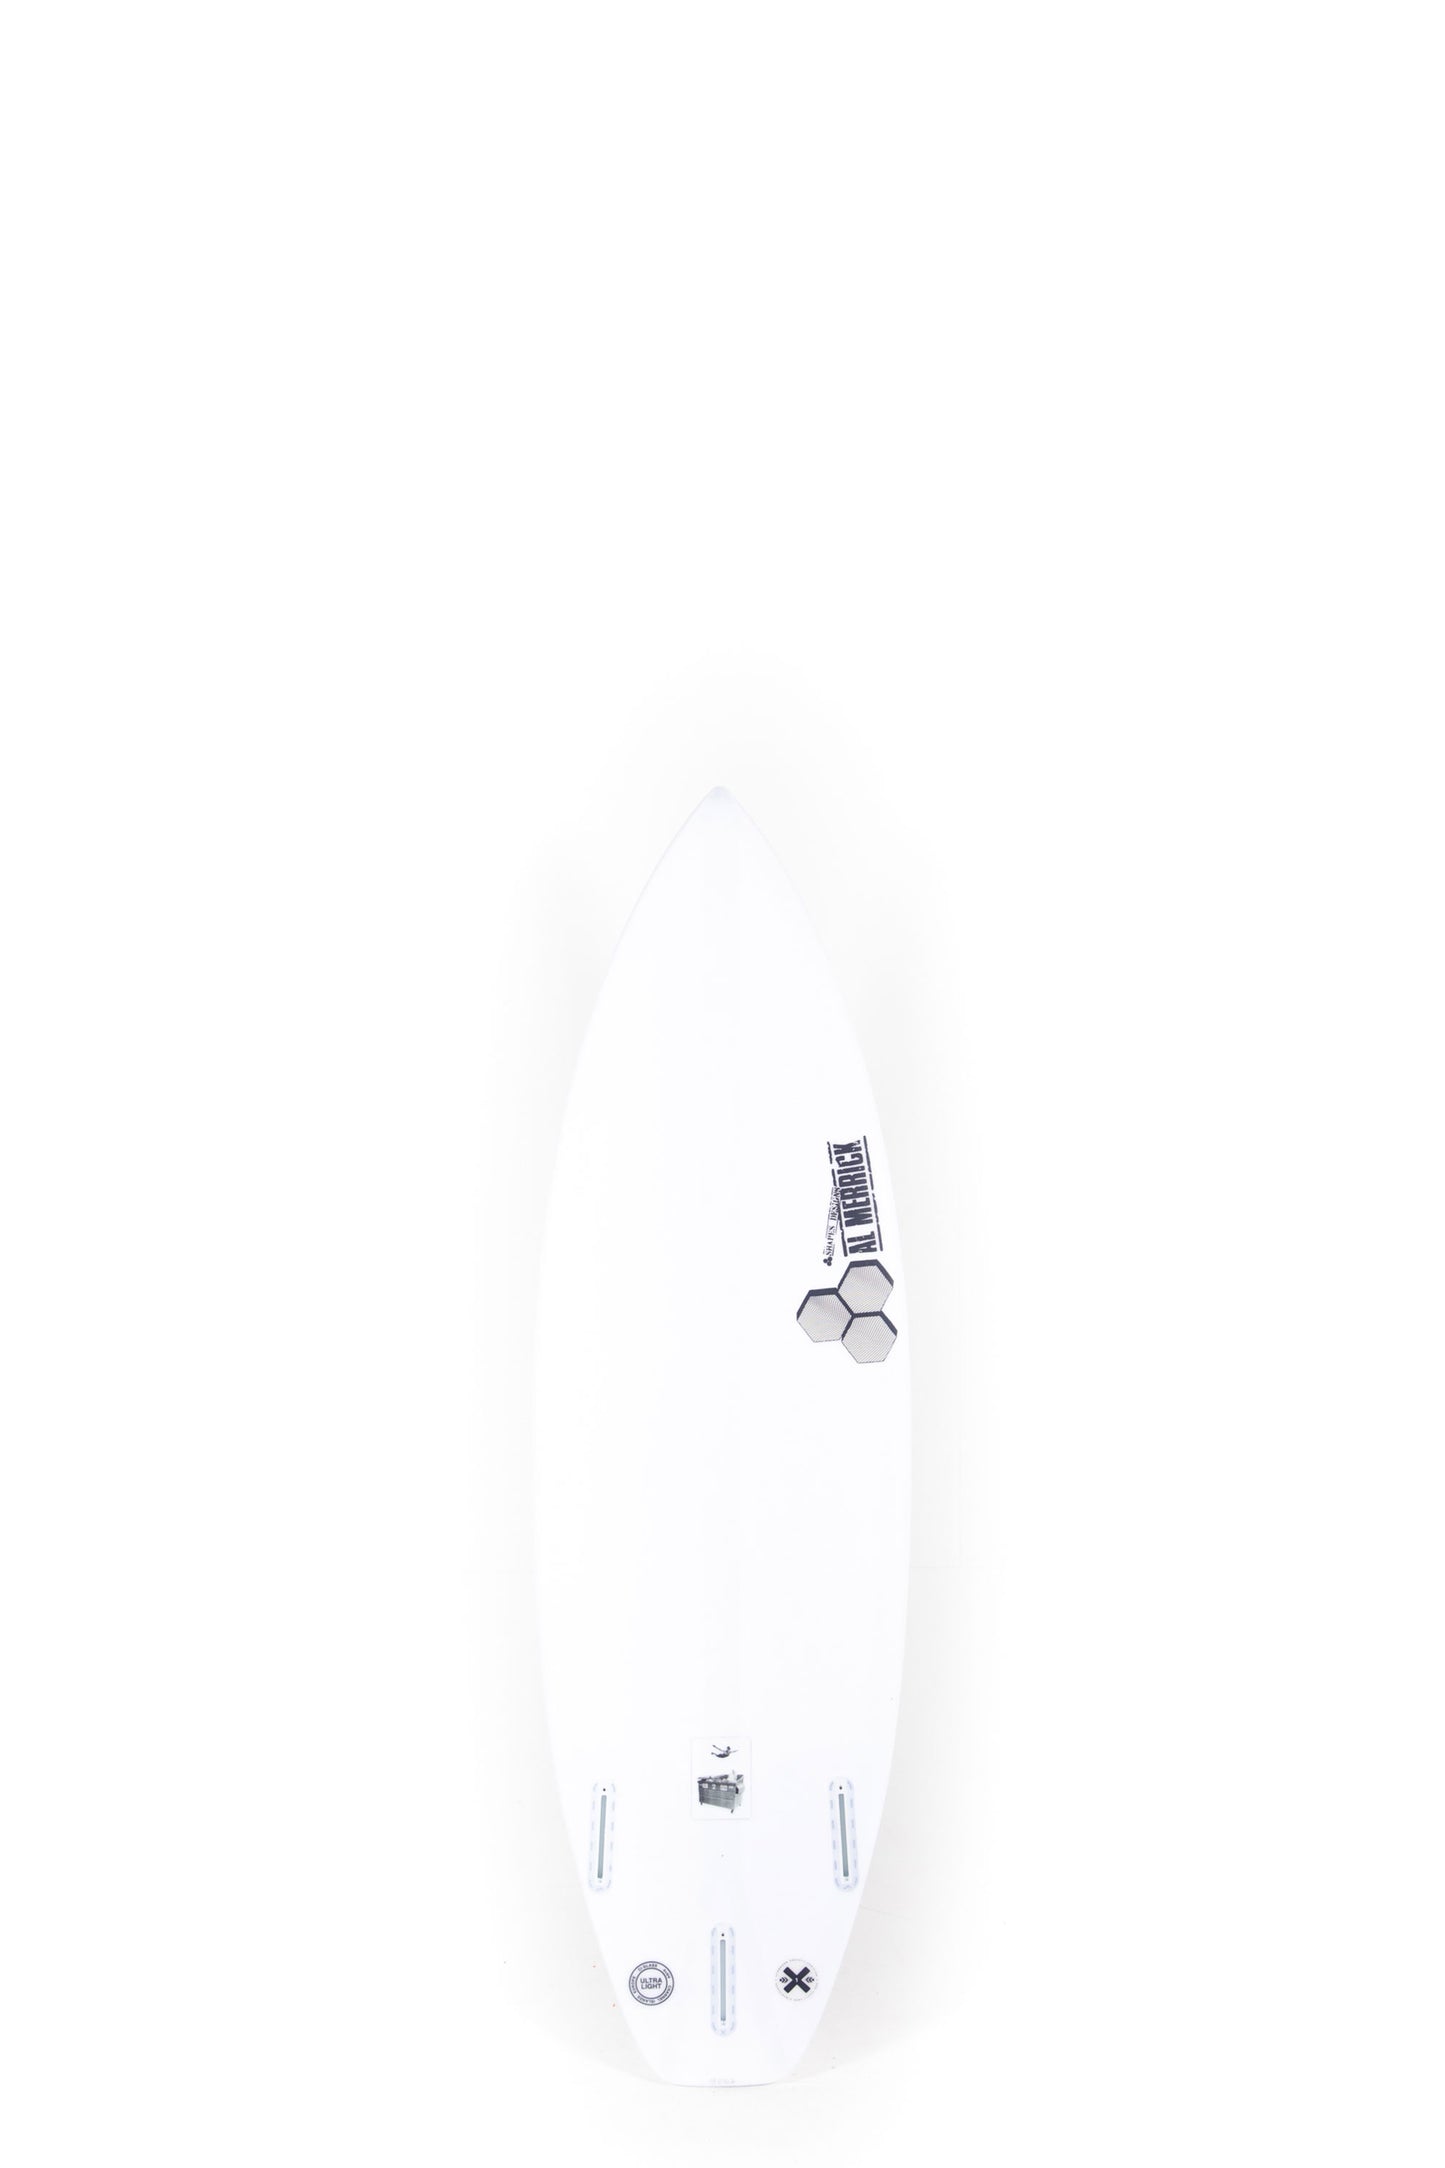 
                  
                    Pukas Surf Shop - Channel Islands - DUMPSTER DIVER 2 Spine Tek by Britt Merrick -  5'7" x 19 1/4 x 2 3/8 - 27,80L - CI31317
                  
                